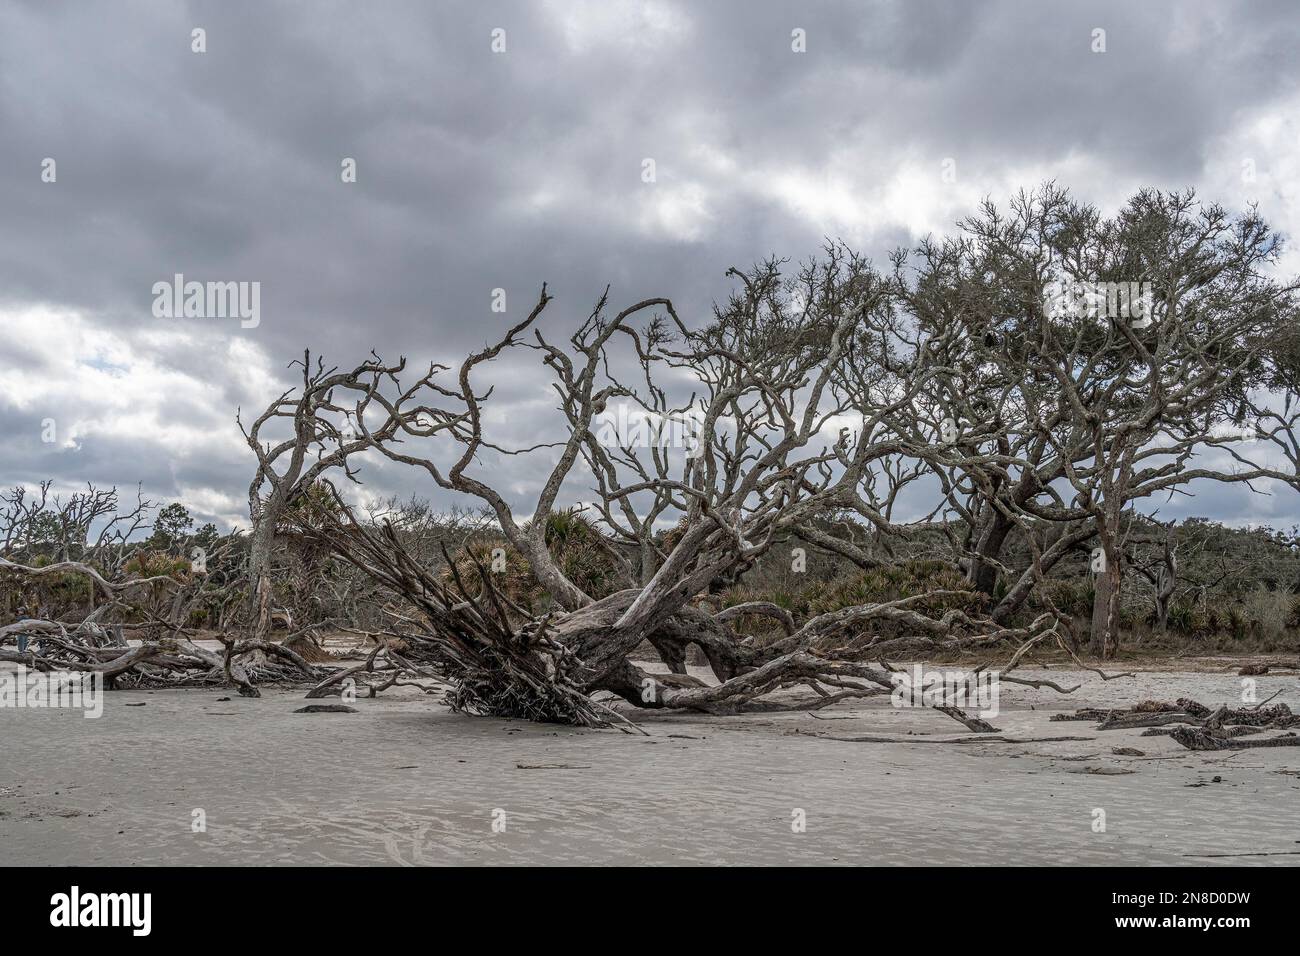 Driftwood on the beach of Jekyll Island Stock Photo